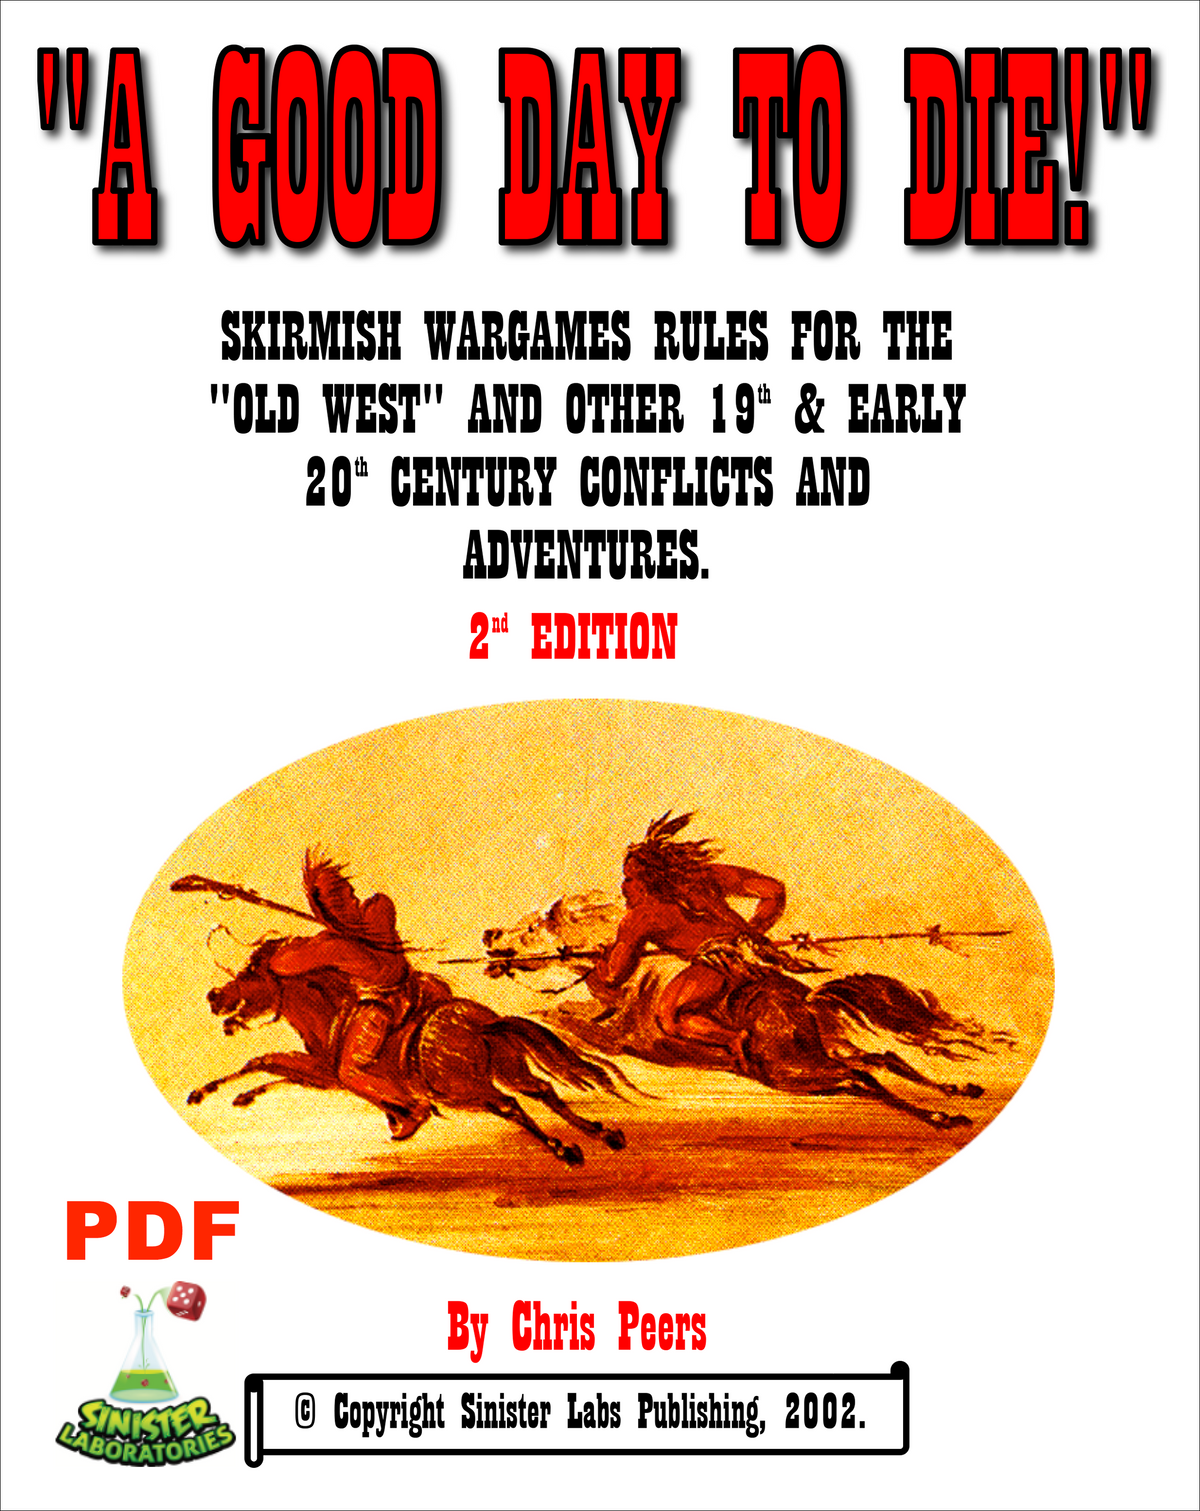 A Good Day To Die - 19th Century Skirmish Wargaming Rules - PDF (Digital Version)